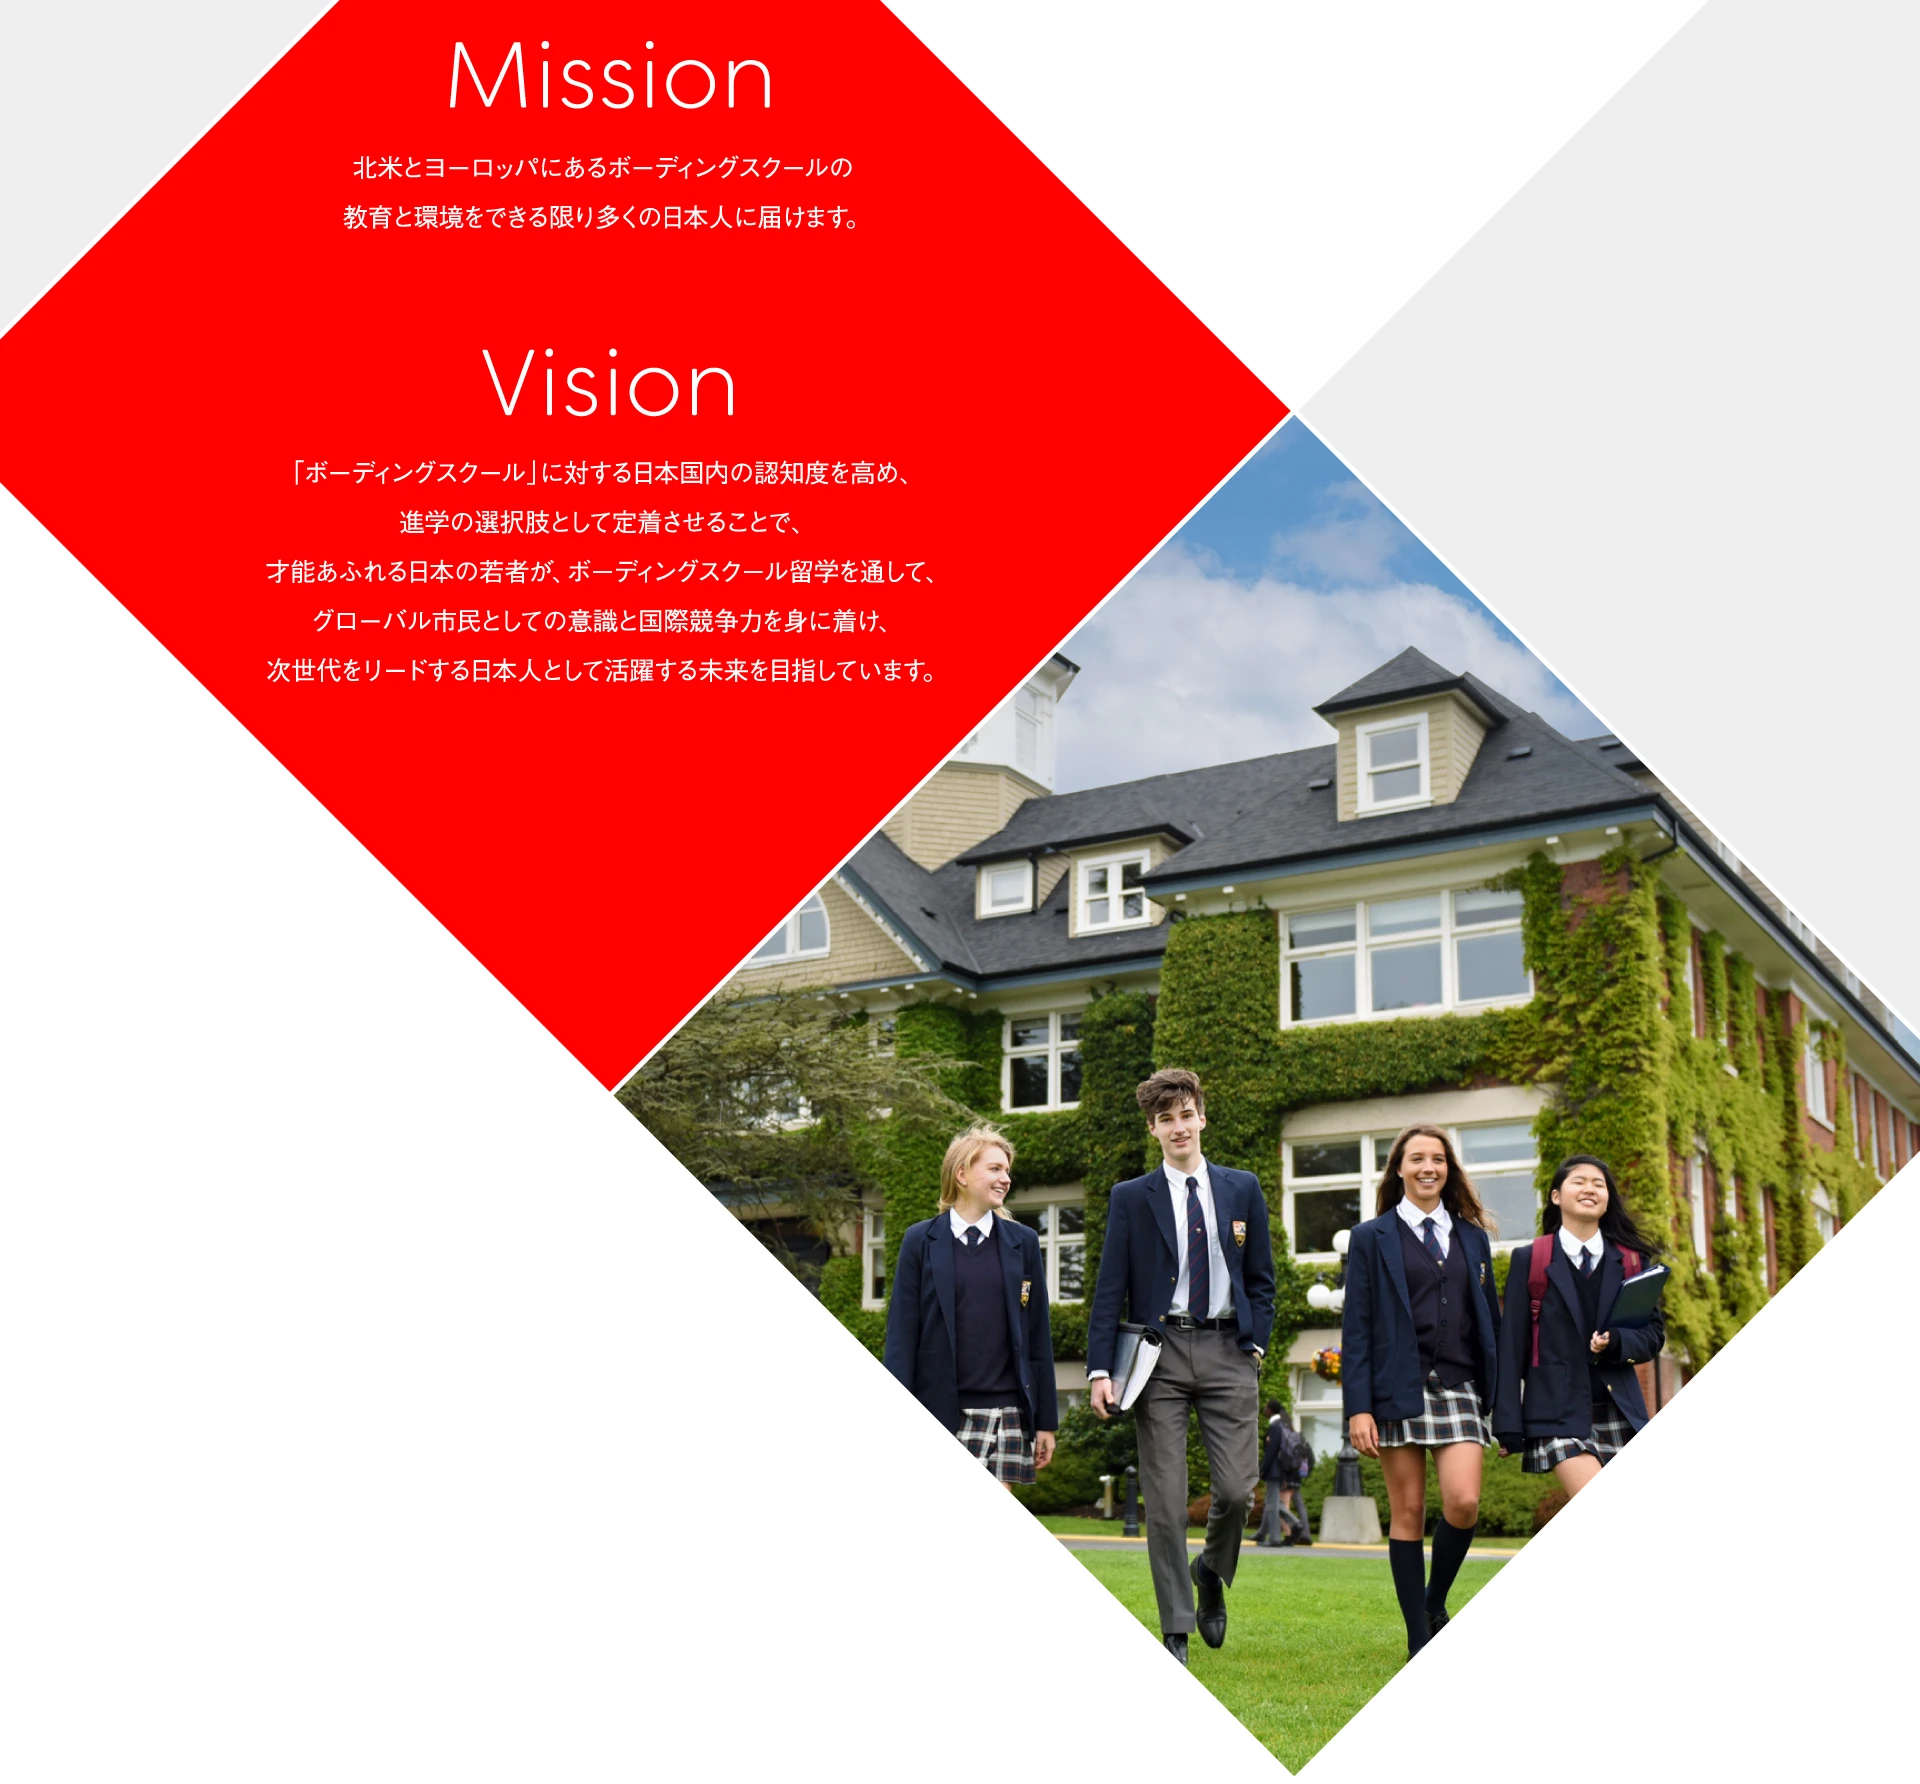 Mission 北米とヨーロッパにあるボーディングスクールの教育と環境をできる限り多くの日本人に届けます。 Vision 「ボーディングスクール」に対する日本国内の認知度を高め、進学の選択肢として定着させることで、才能あふれる日本の若者が、ボーディングスクール留学を通して、グローバル市民としての意識と国際競争力を身に着け、次世代をリードする日本人として活躍する未来を目指しています。